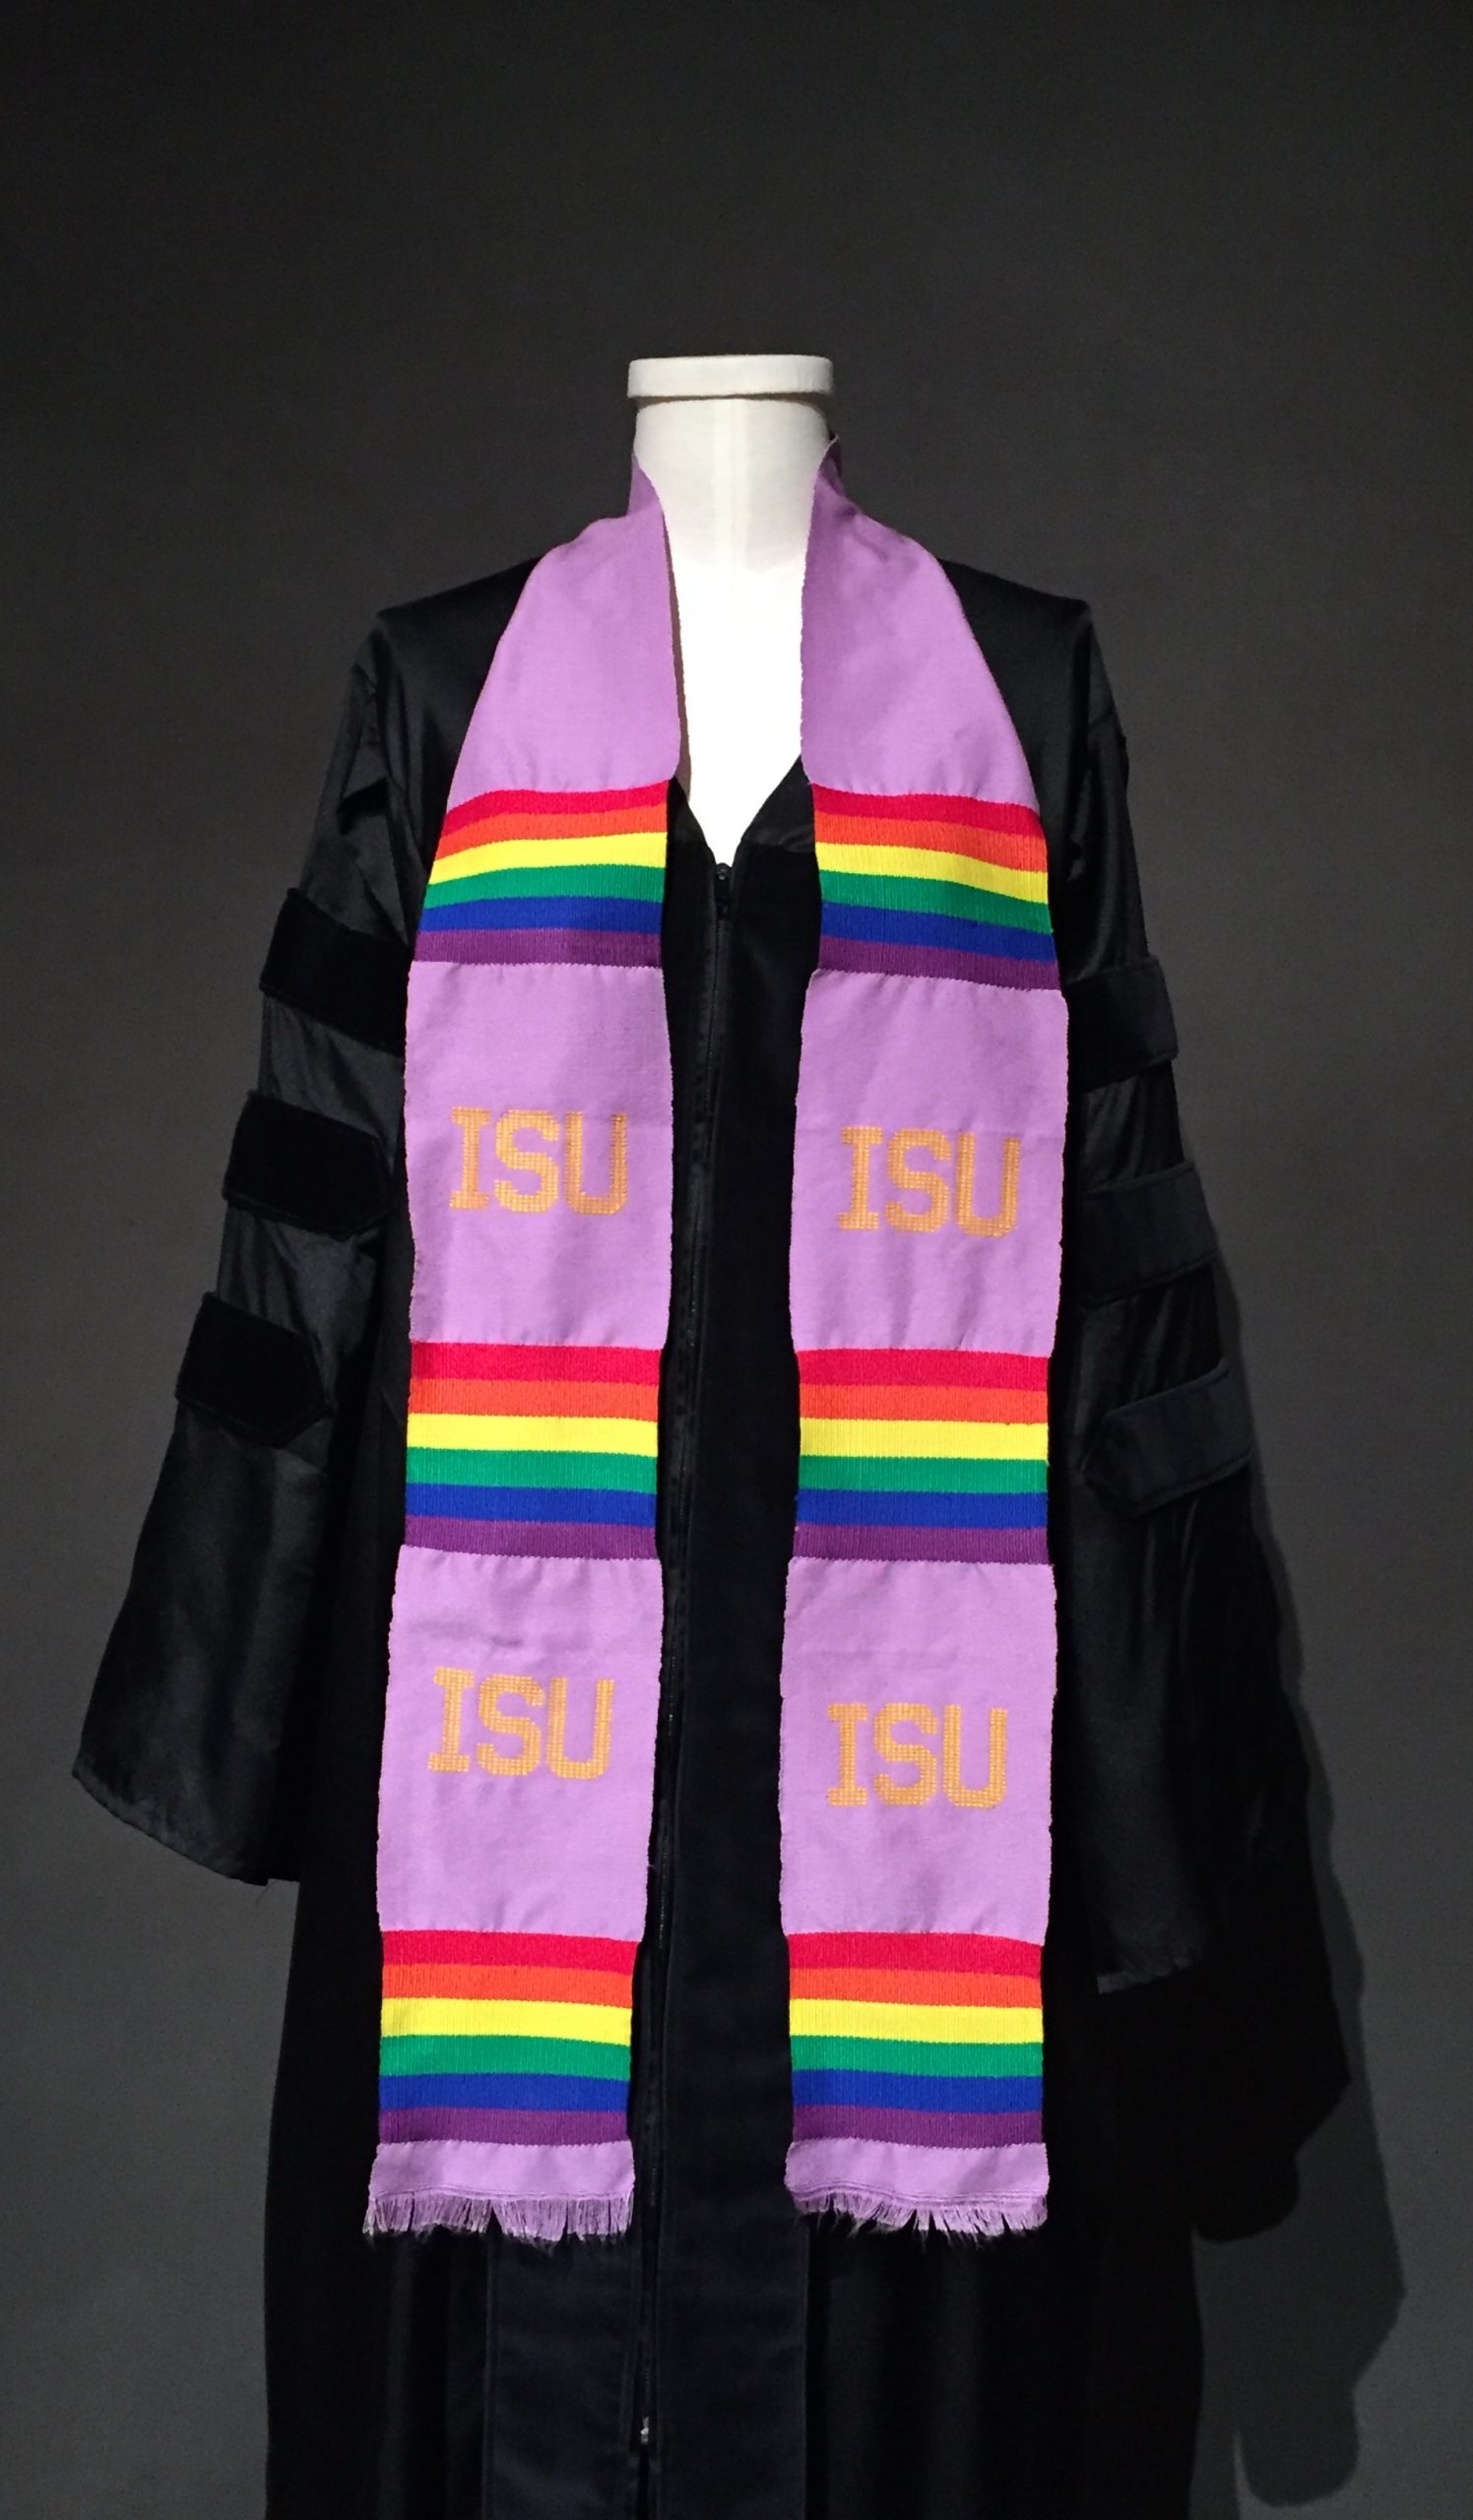 Black graduation robe, lavender graduation stole with ISU motif and rainbow bands